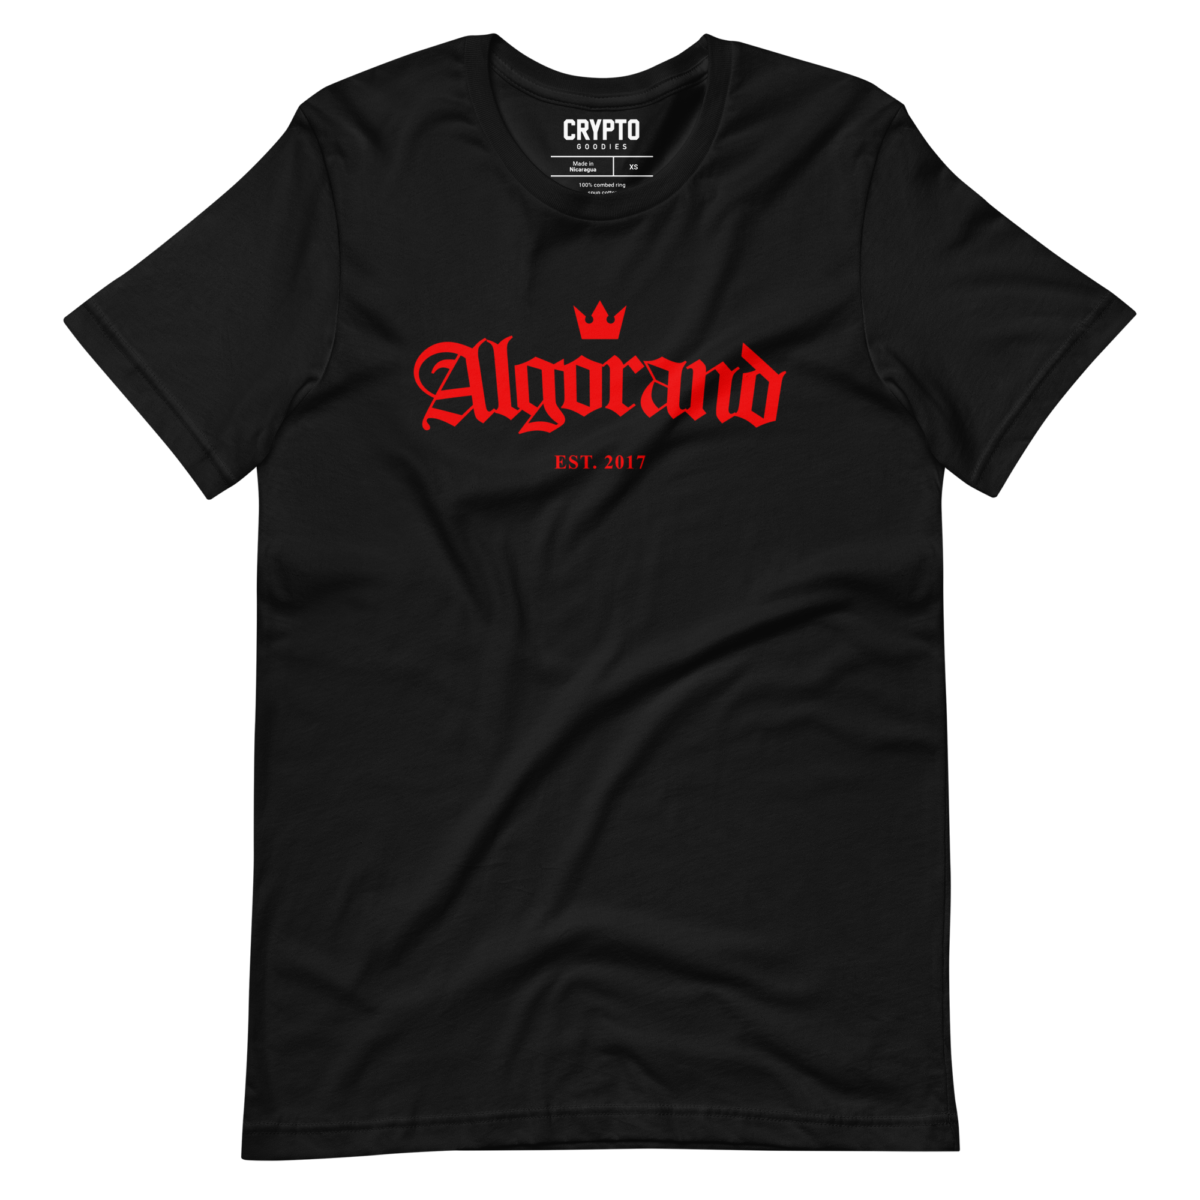 unisex staple t shirt black front 63a331a3a4965 - Algorand (RED) T-Shirt